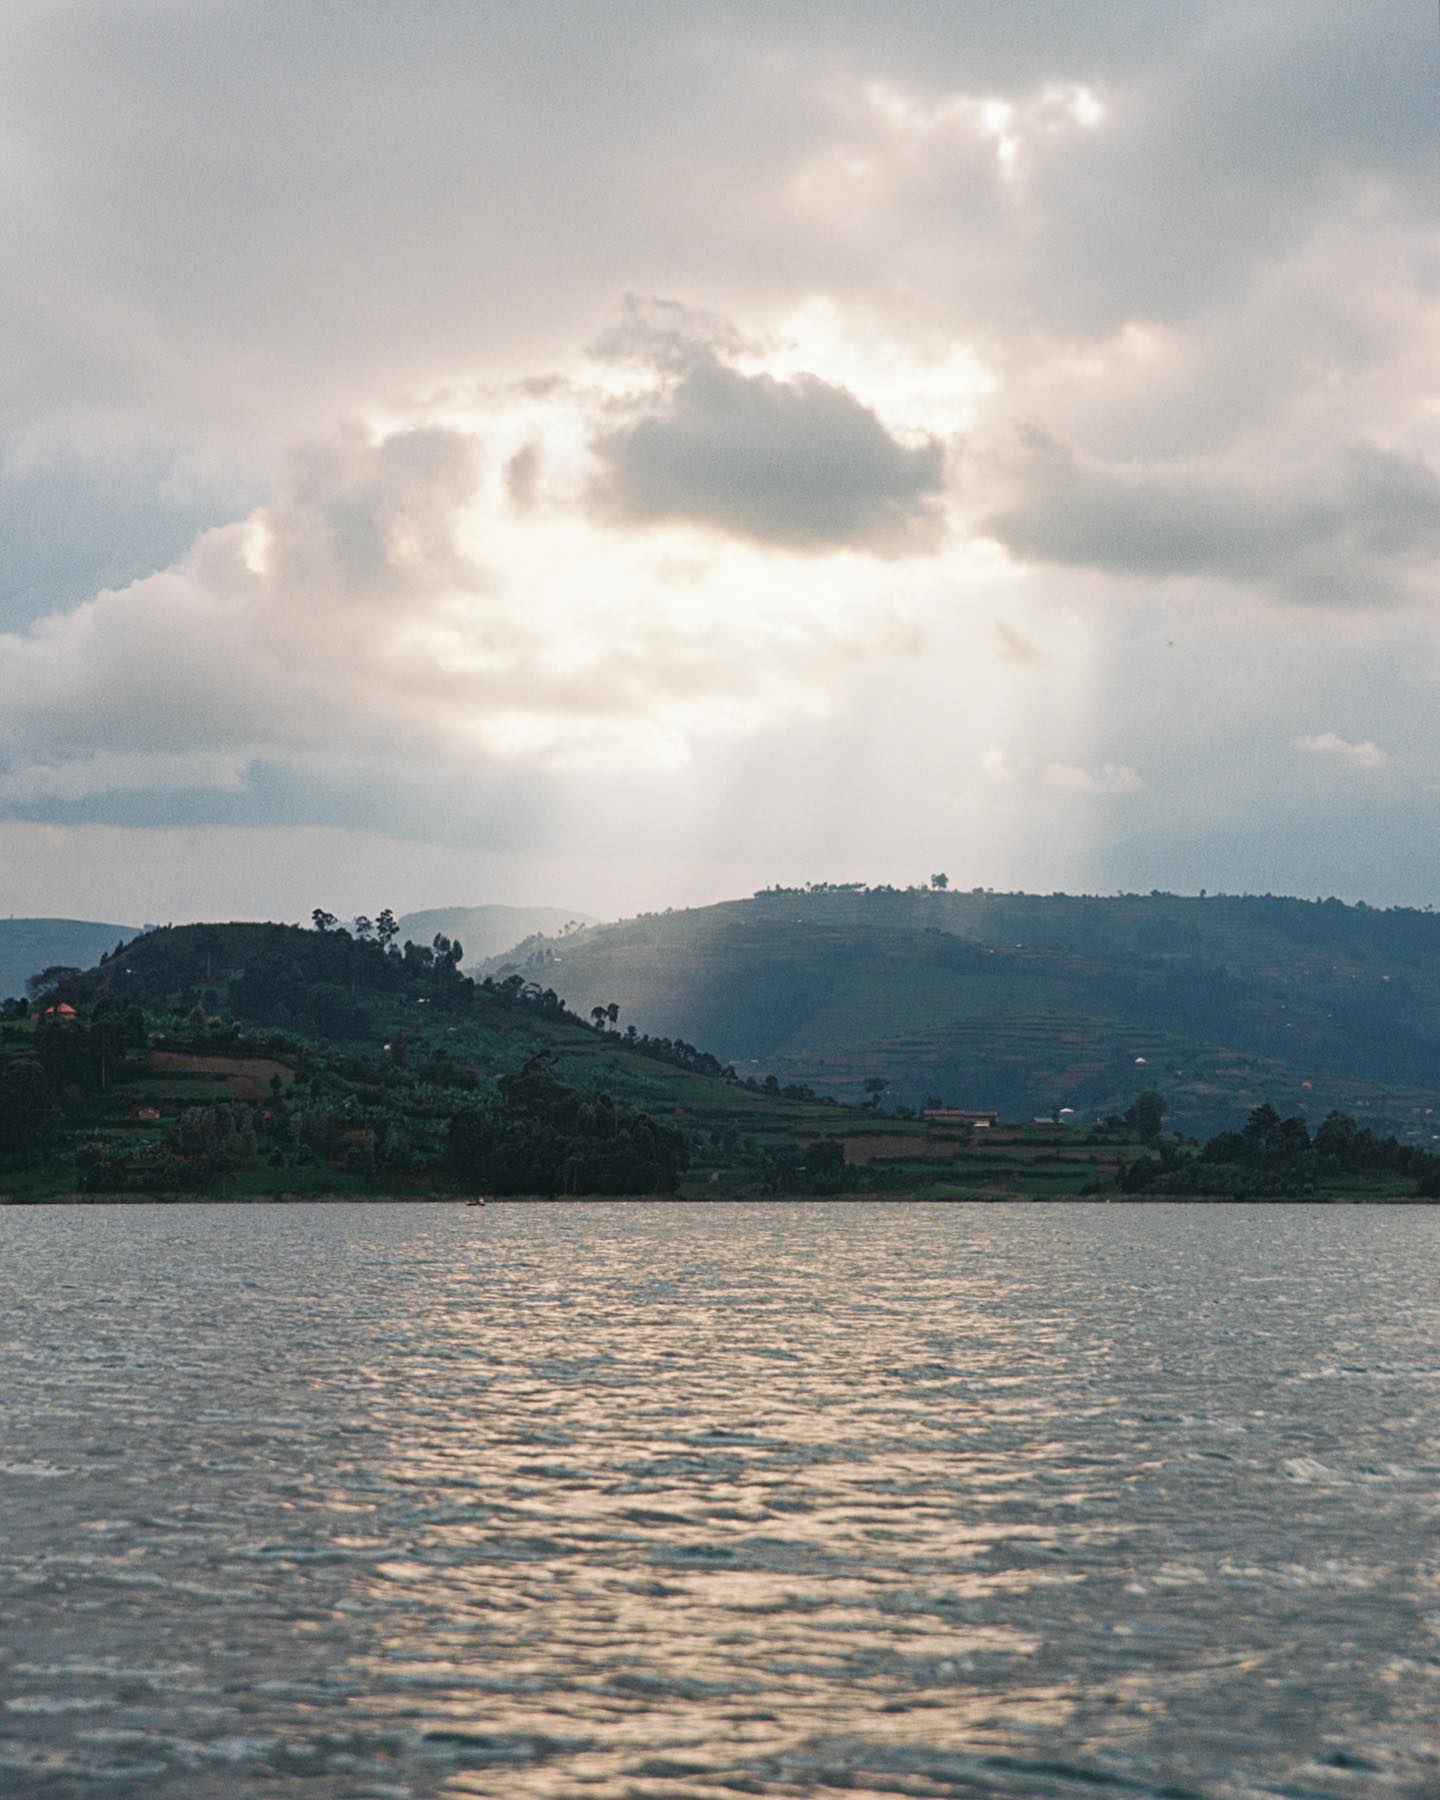 “Lit AF” • 35mm Kodak Ektar 100 • Canon Rebel K2 • Sigma 24-70mm f2.8 
•
•
•
#Kisoro #Uganda #Africa #EastAfrica #lake #lakebunyonyi #film #35mm #photography #photooftheday #travel #boating #light #lightrays #clouds #godlight